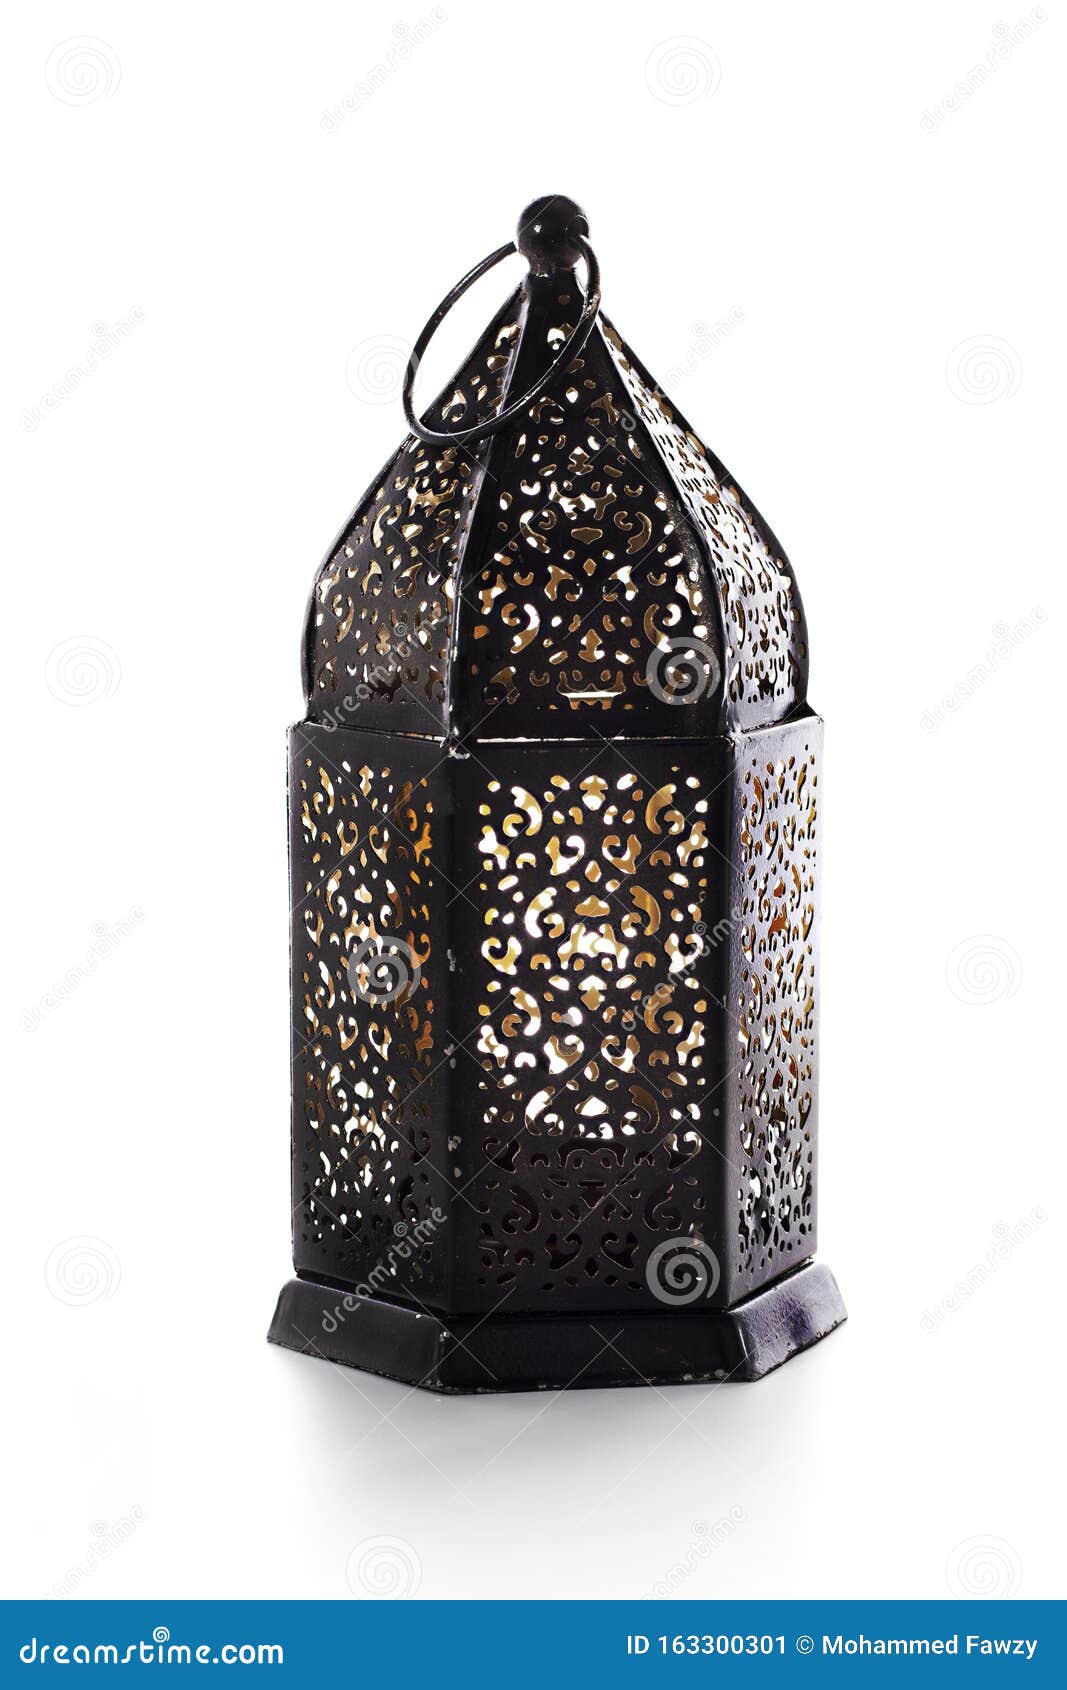 https://thumbs.dreamstime.com/z/ramadan-lantern-ramadan-lamp-ramadan-kareem-white-background-image-ramadan-lantern-ramadan-lamp-ramadan-kareem-close-up-163300301.jpg